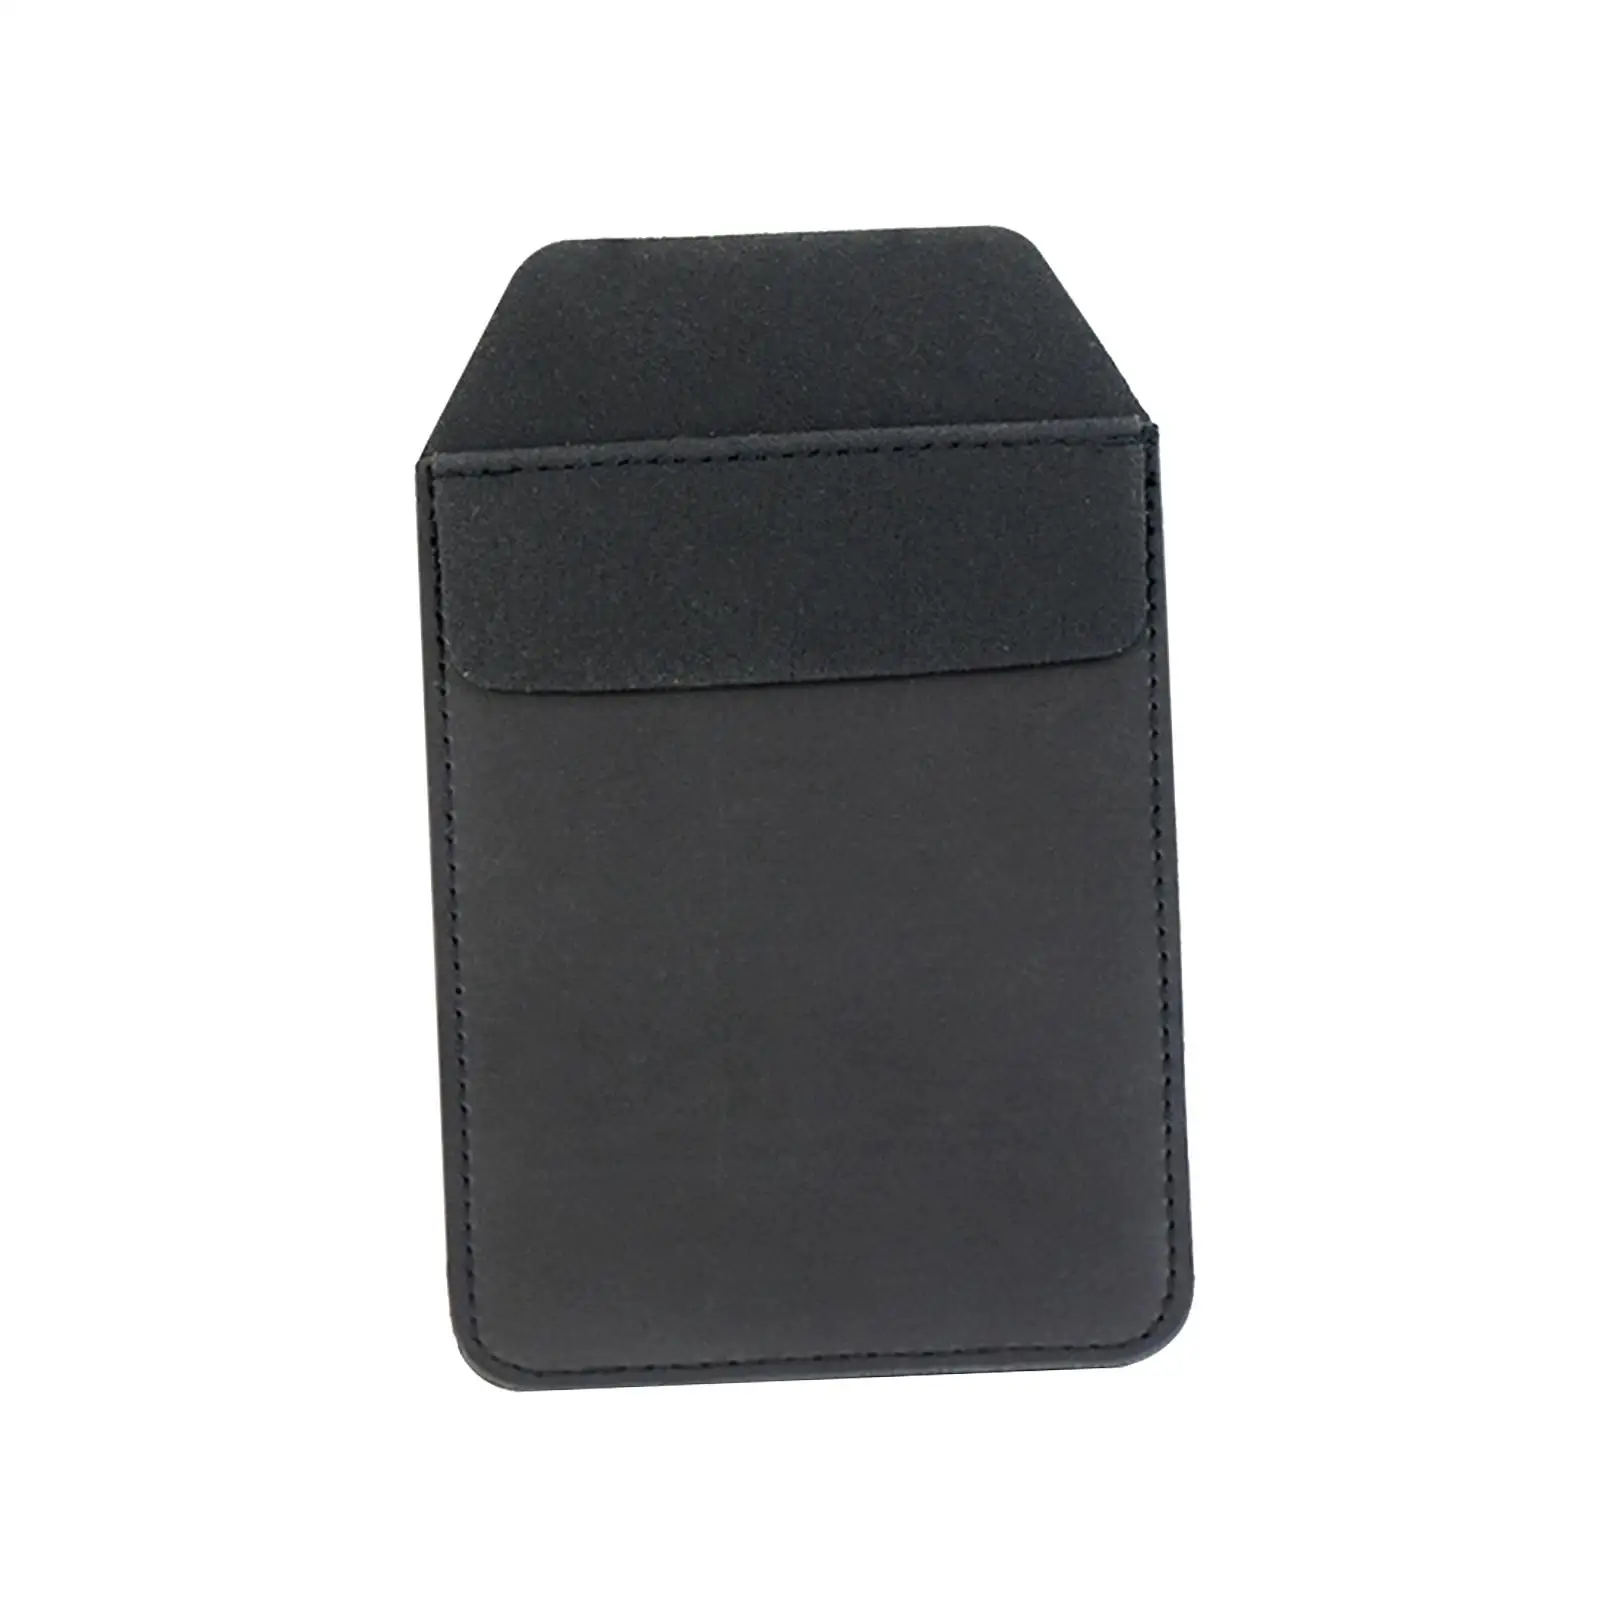 Pocket Protector Pocket Holder Organizer Утечка Толстая искусственная кожа для брюк 2